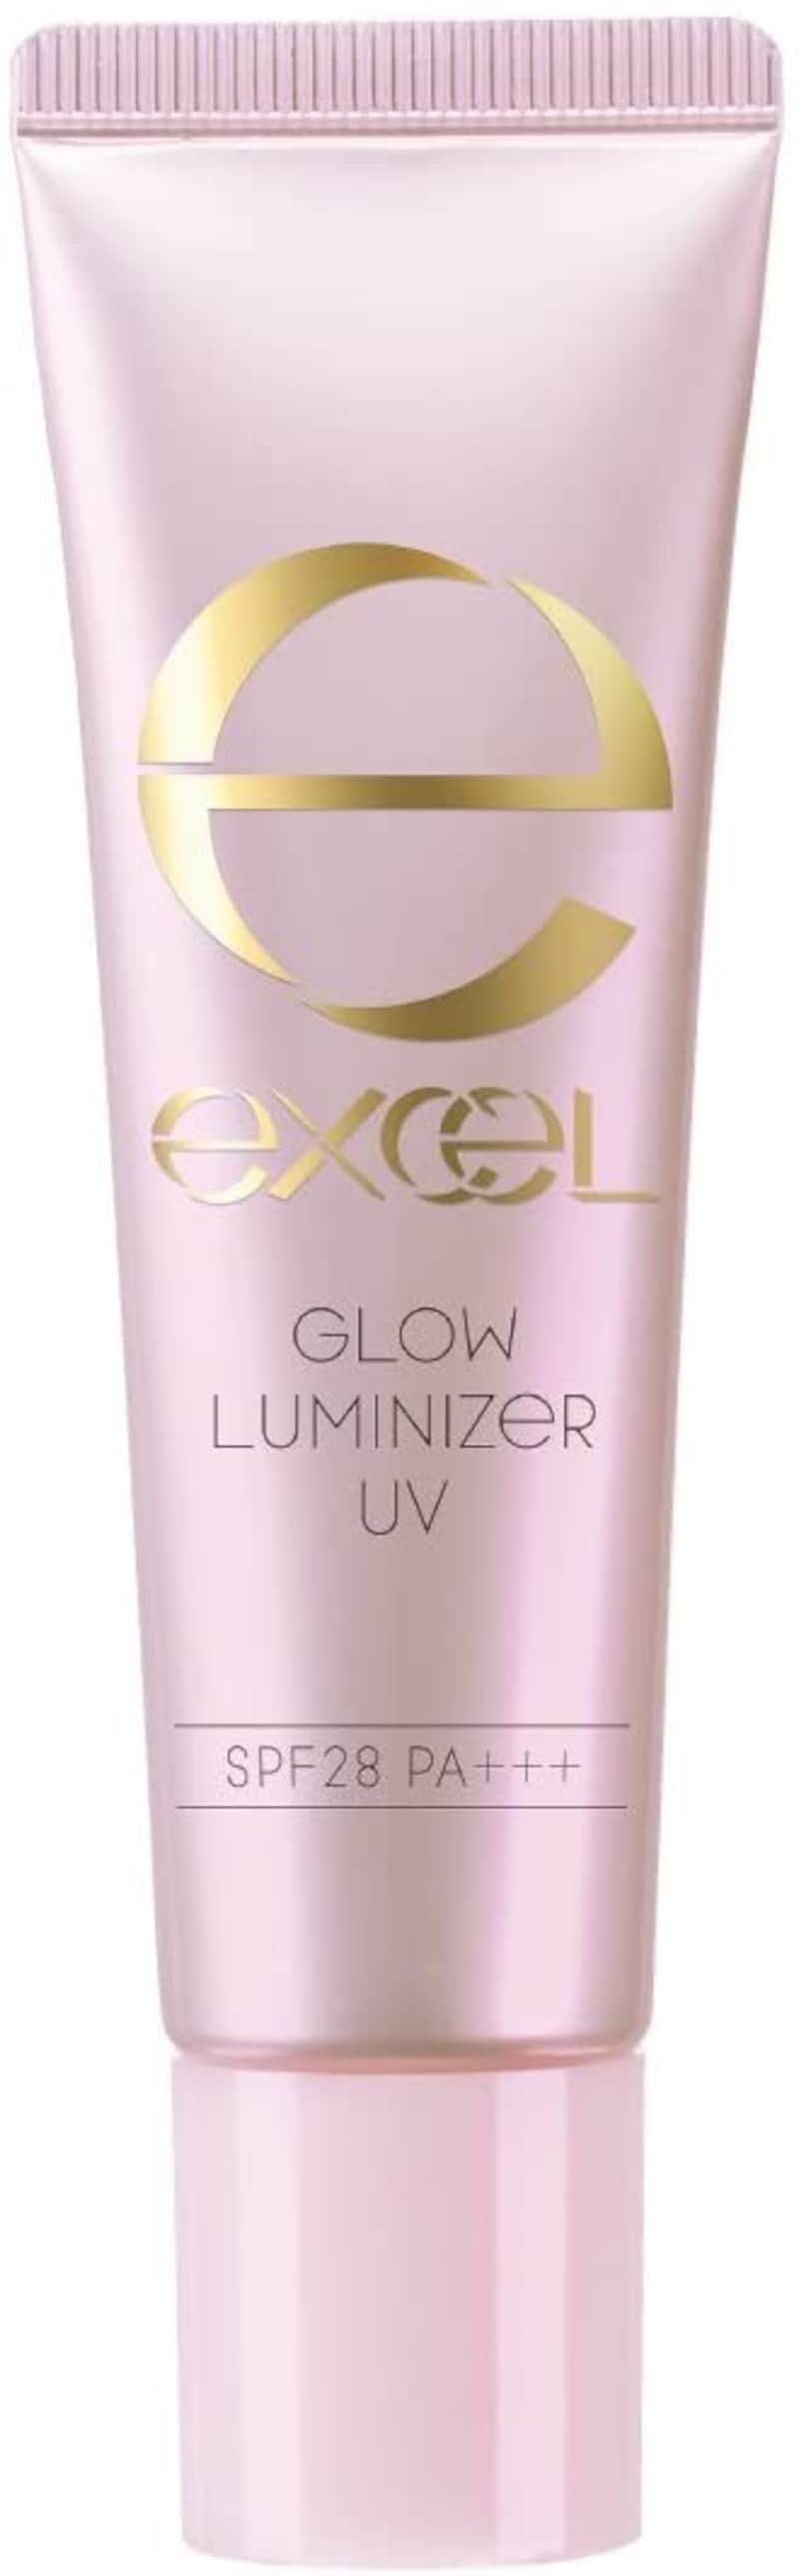 excel（エクセル）,グロウルミナイザー UV,GL01 